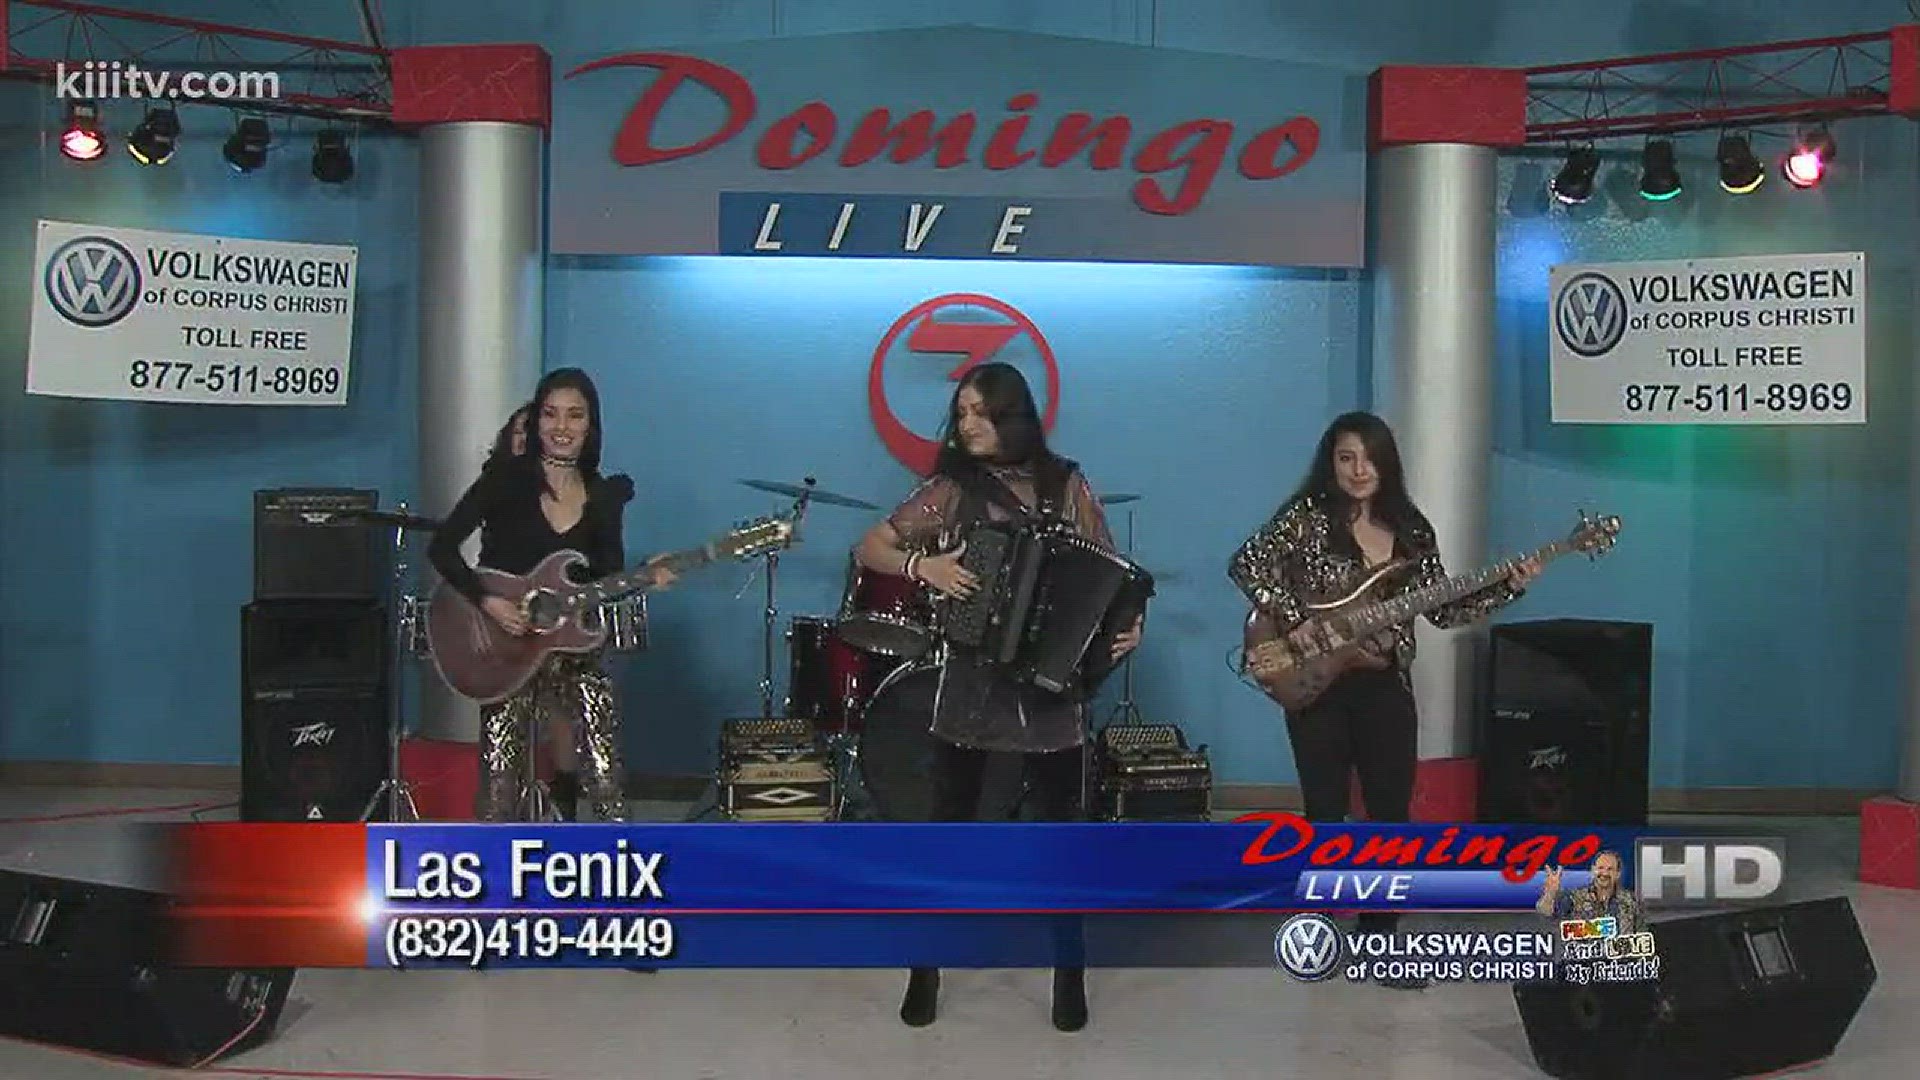 Las Fenix Closing Ceremony Performance on Domingo Live!